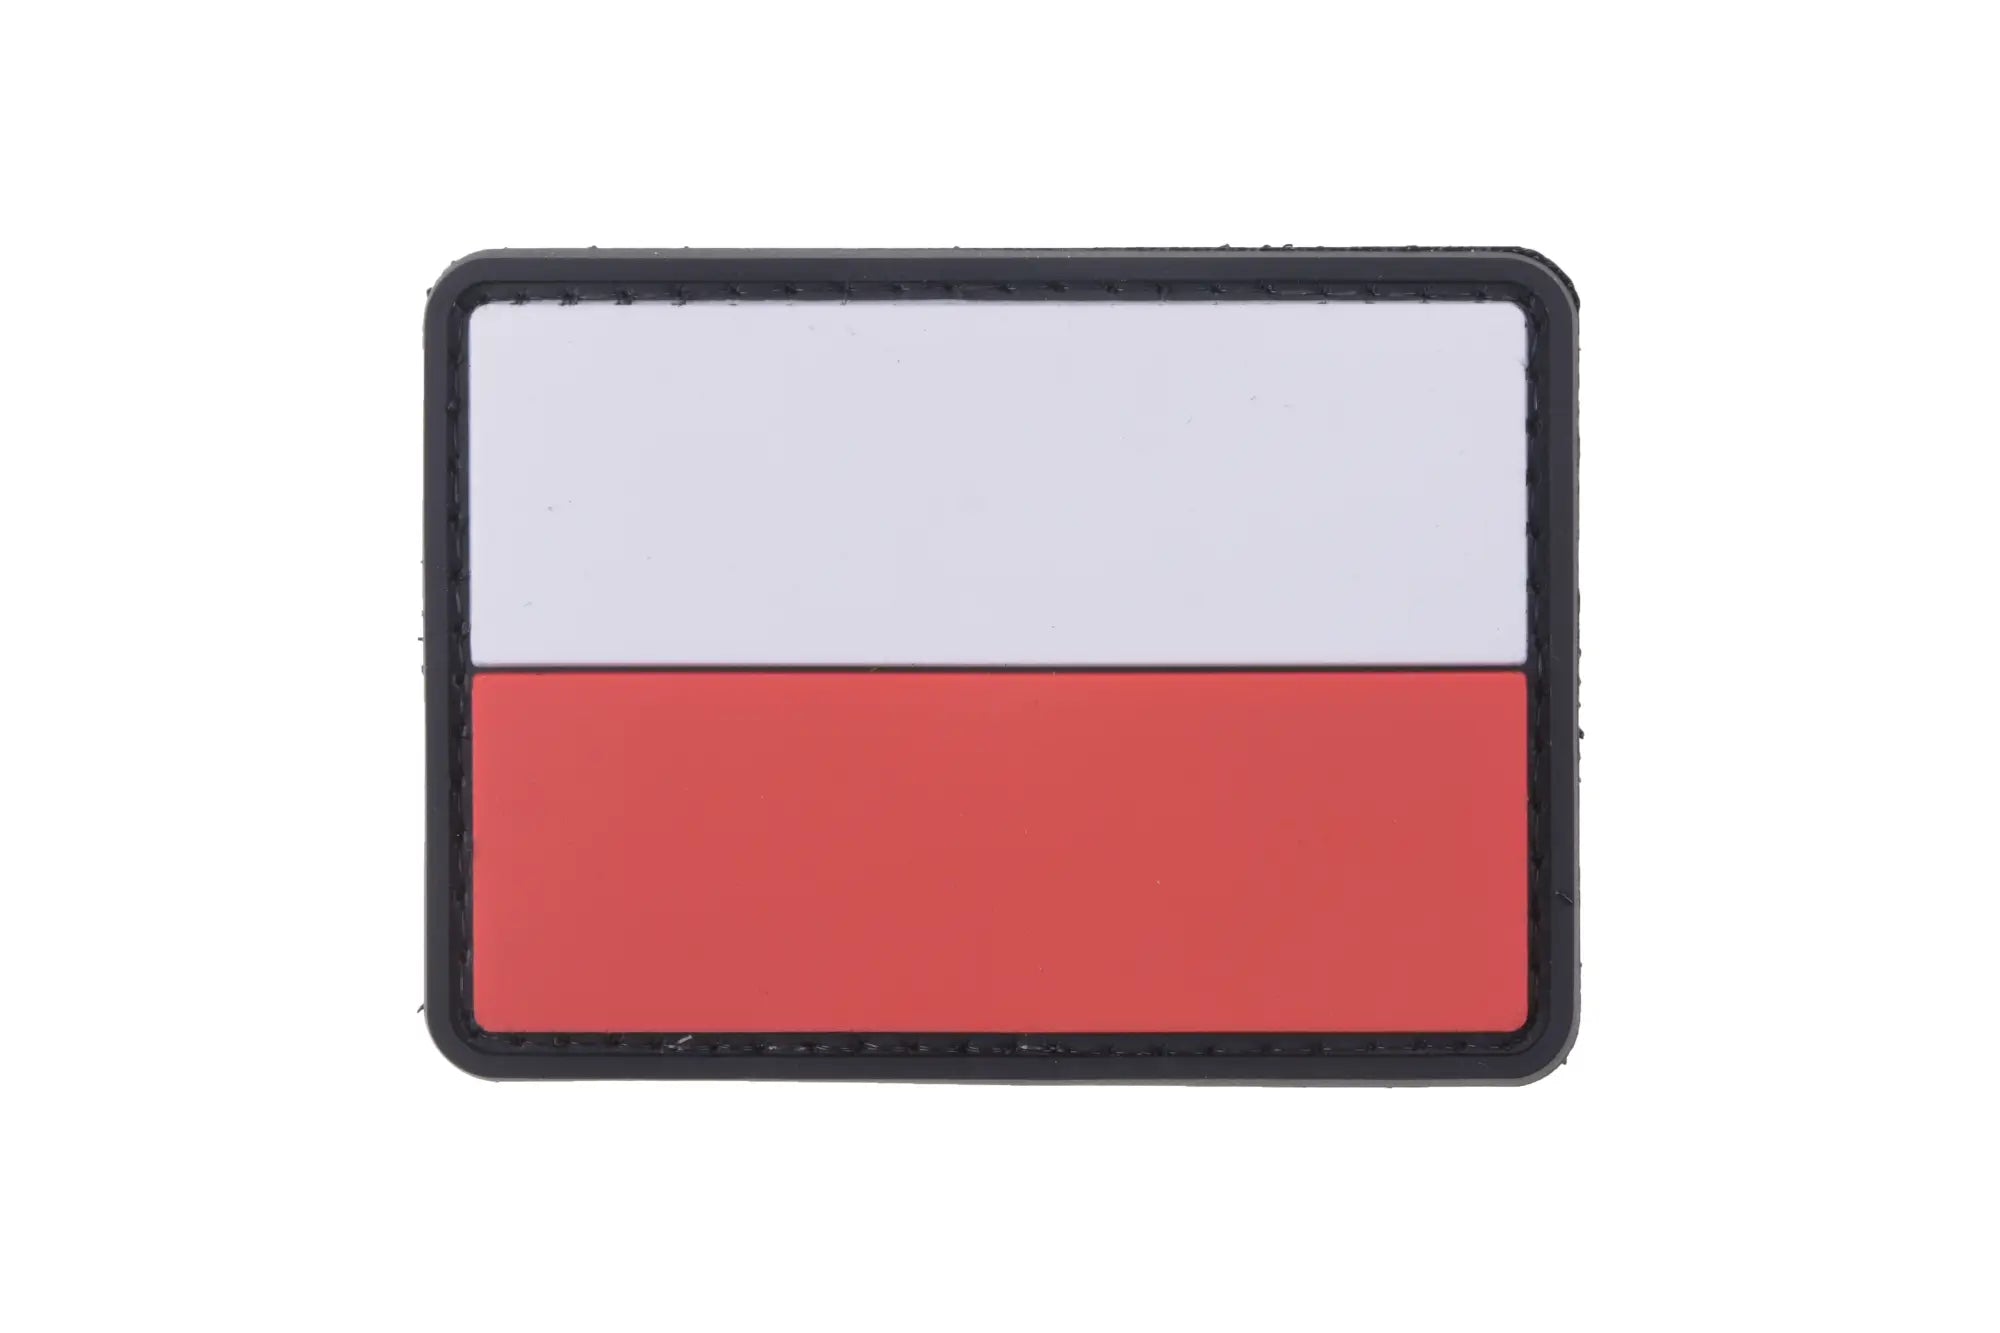 Polish Flag - 3D Patch